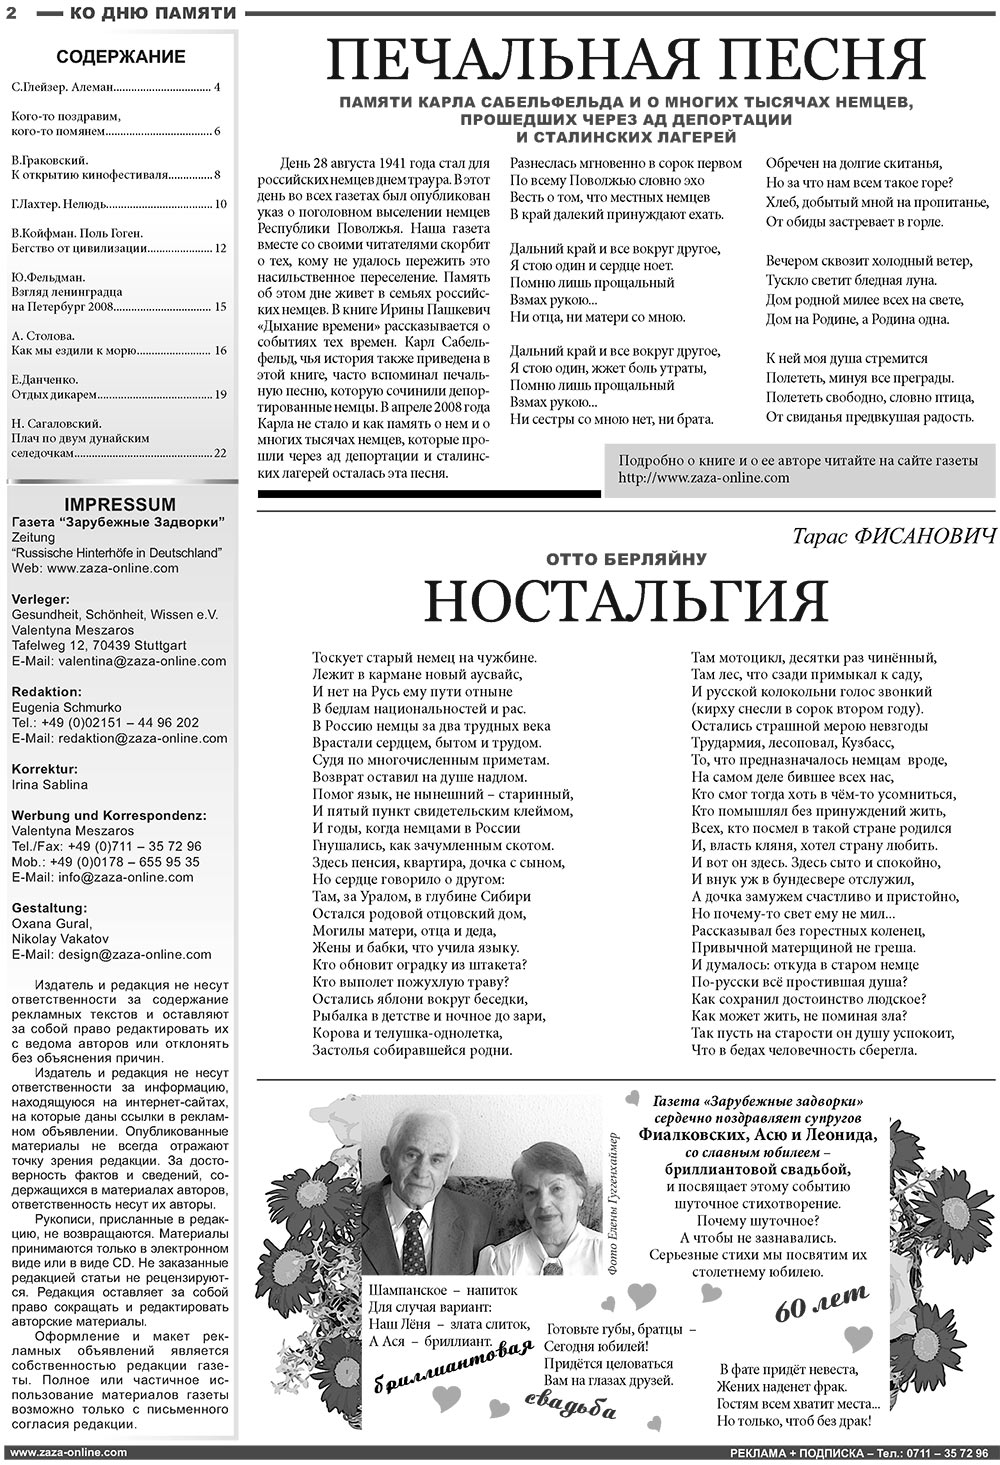 Известия BW (газета). 2008 год, номер 8, стр. 2